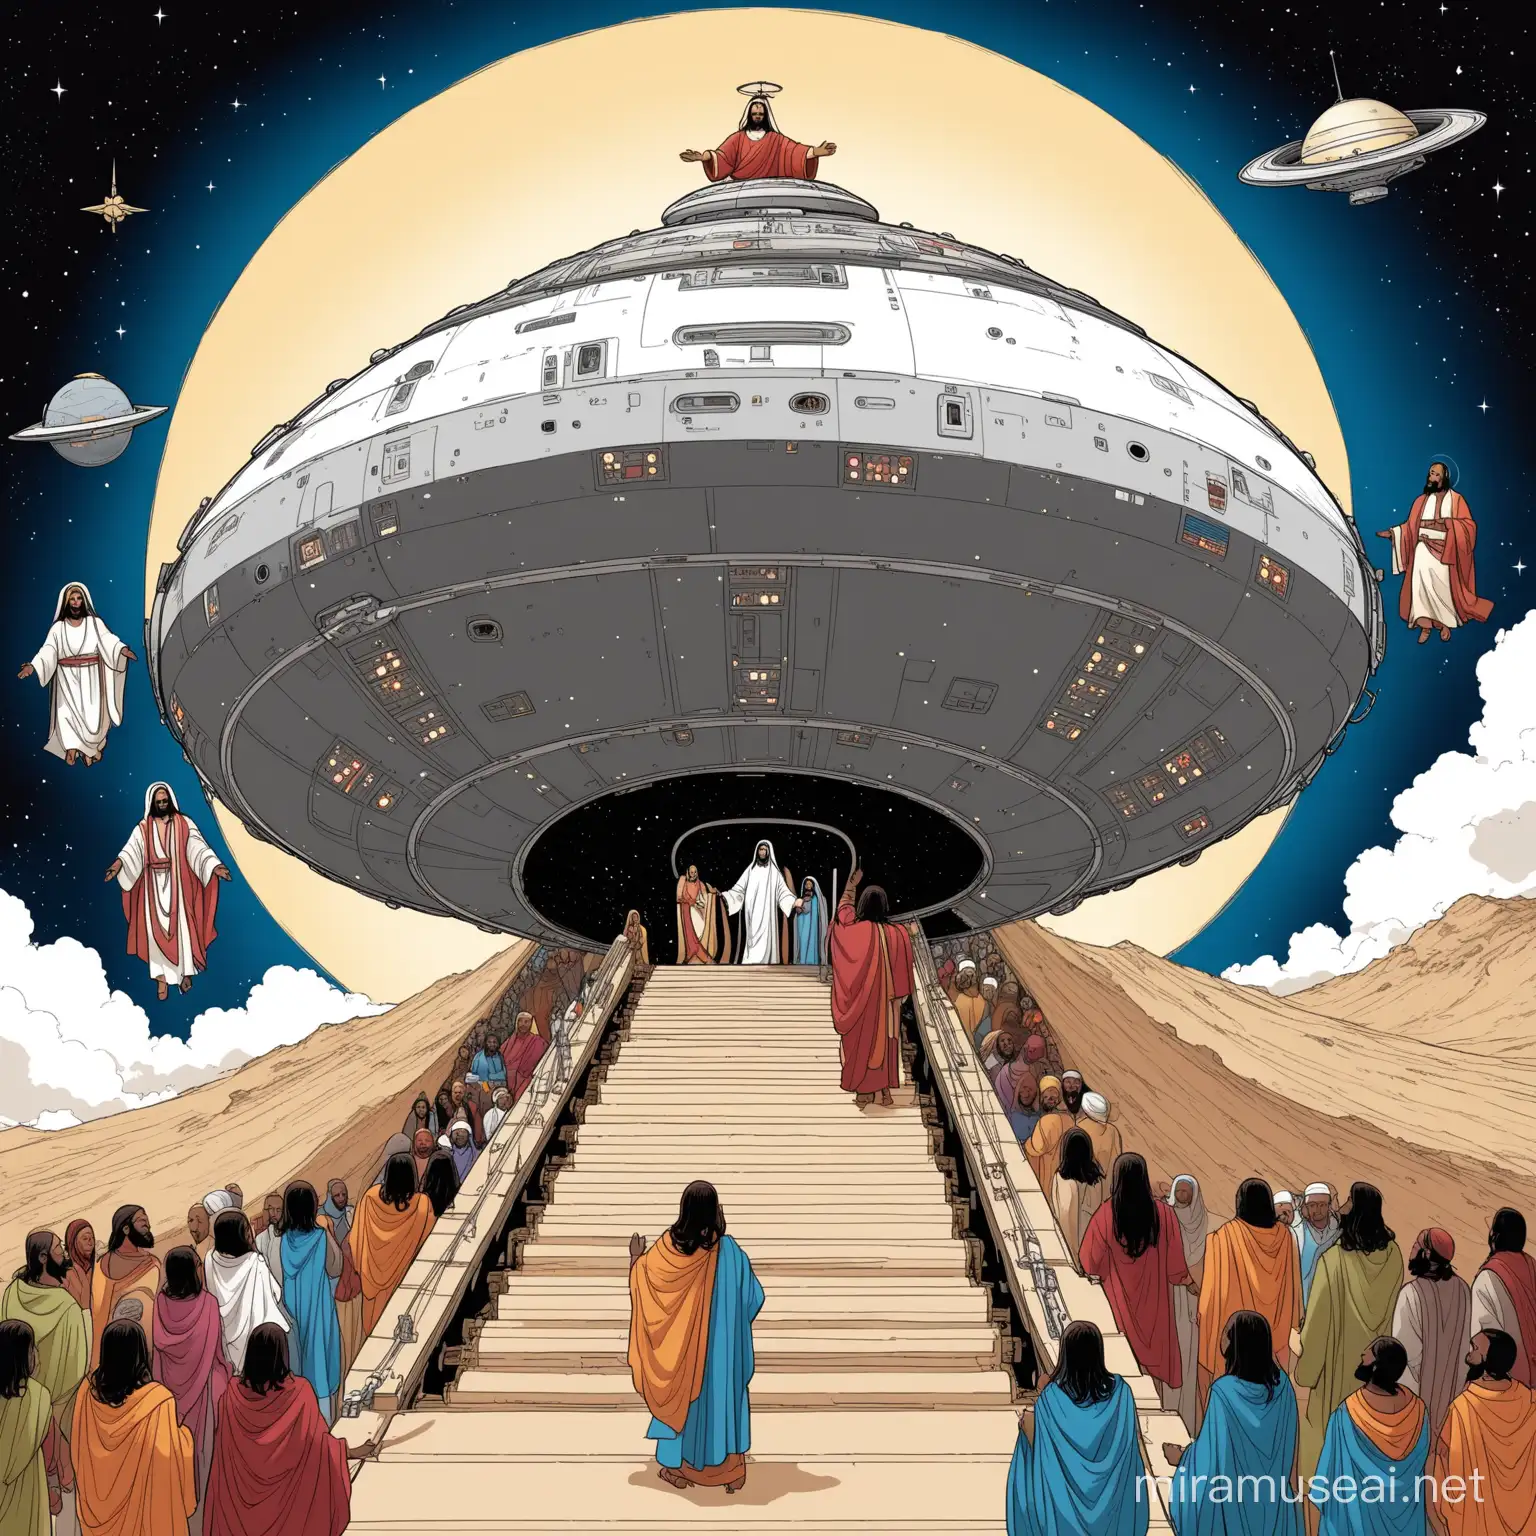 Diverse Jesus Christ Figures Descending from a Spacecraft